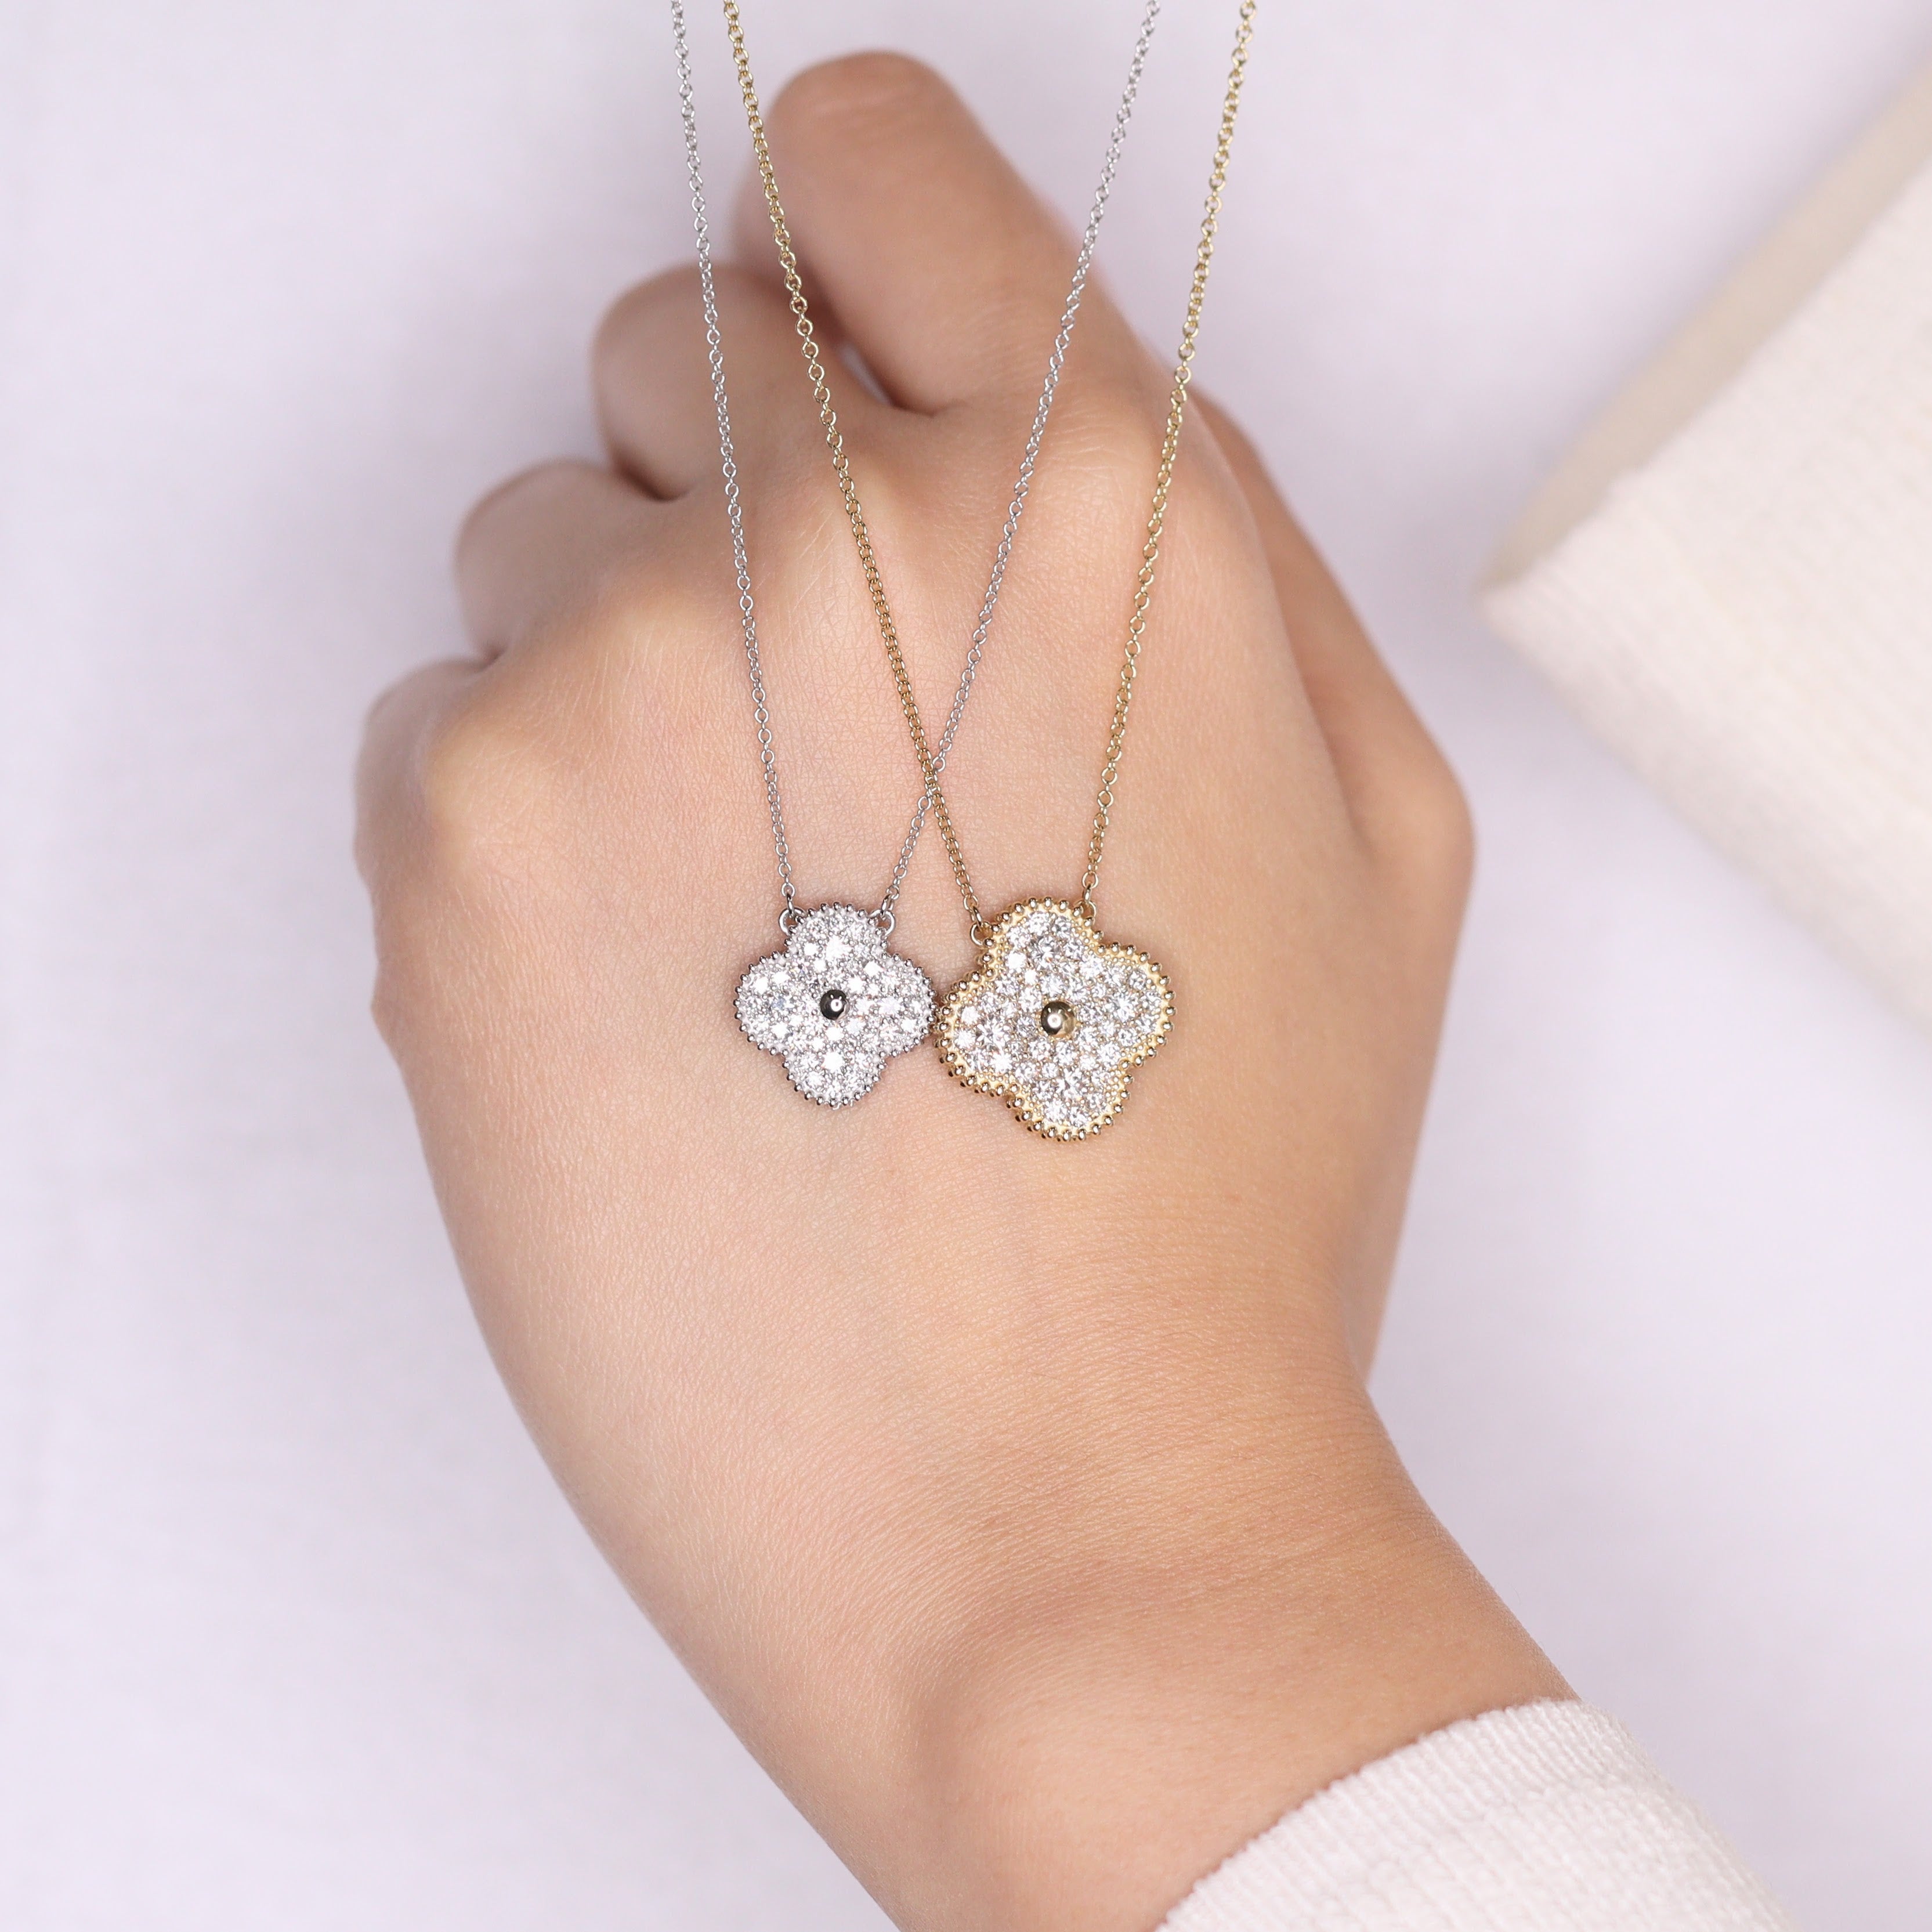 Buy Diamond Clover Necklace, Diamond Pendant Necklace, 18K White Gold  Diamond Flower Necklace Pendant Online in India - Etsy